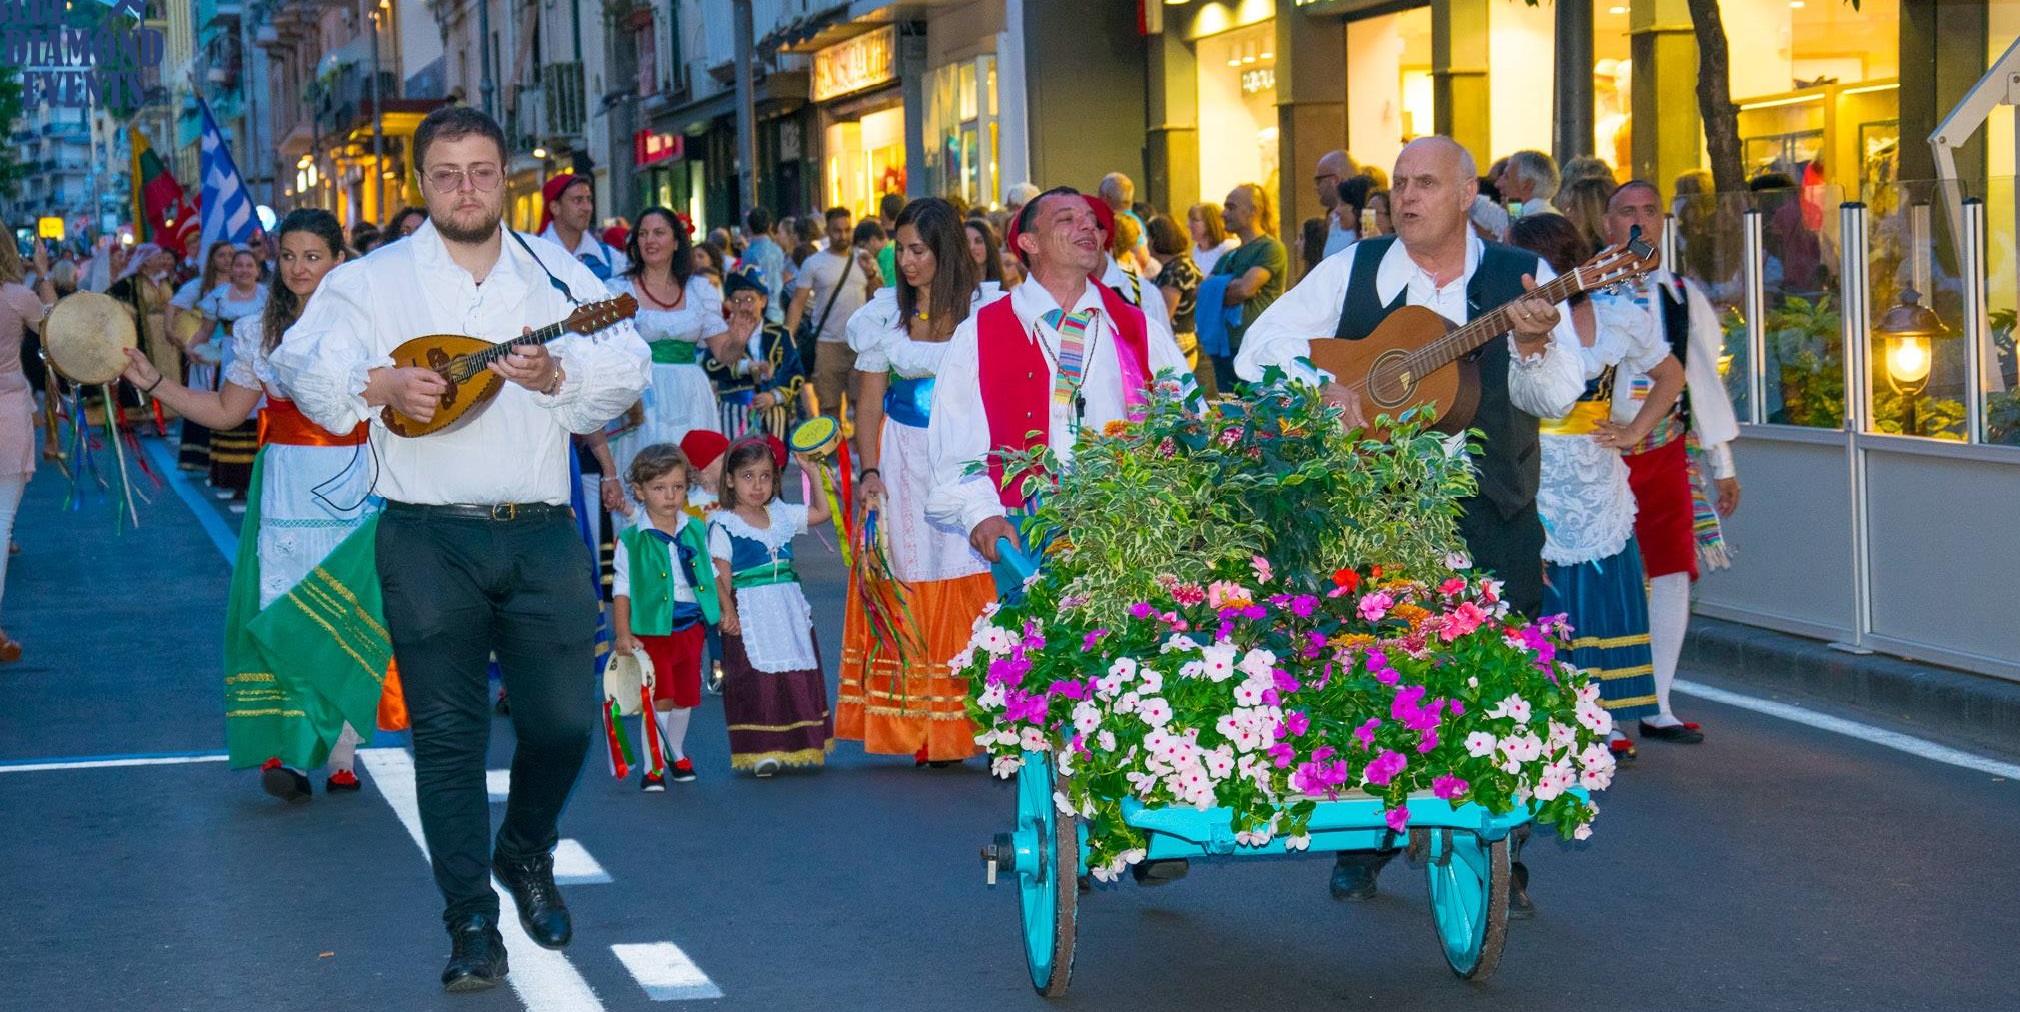 NOV - - - VIII. International folklore festival Tarantella del Vesuvio 2021 Sorrento - Naples